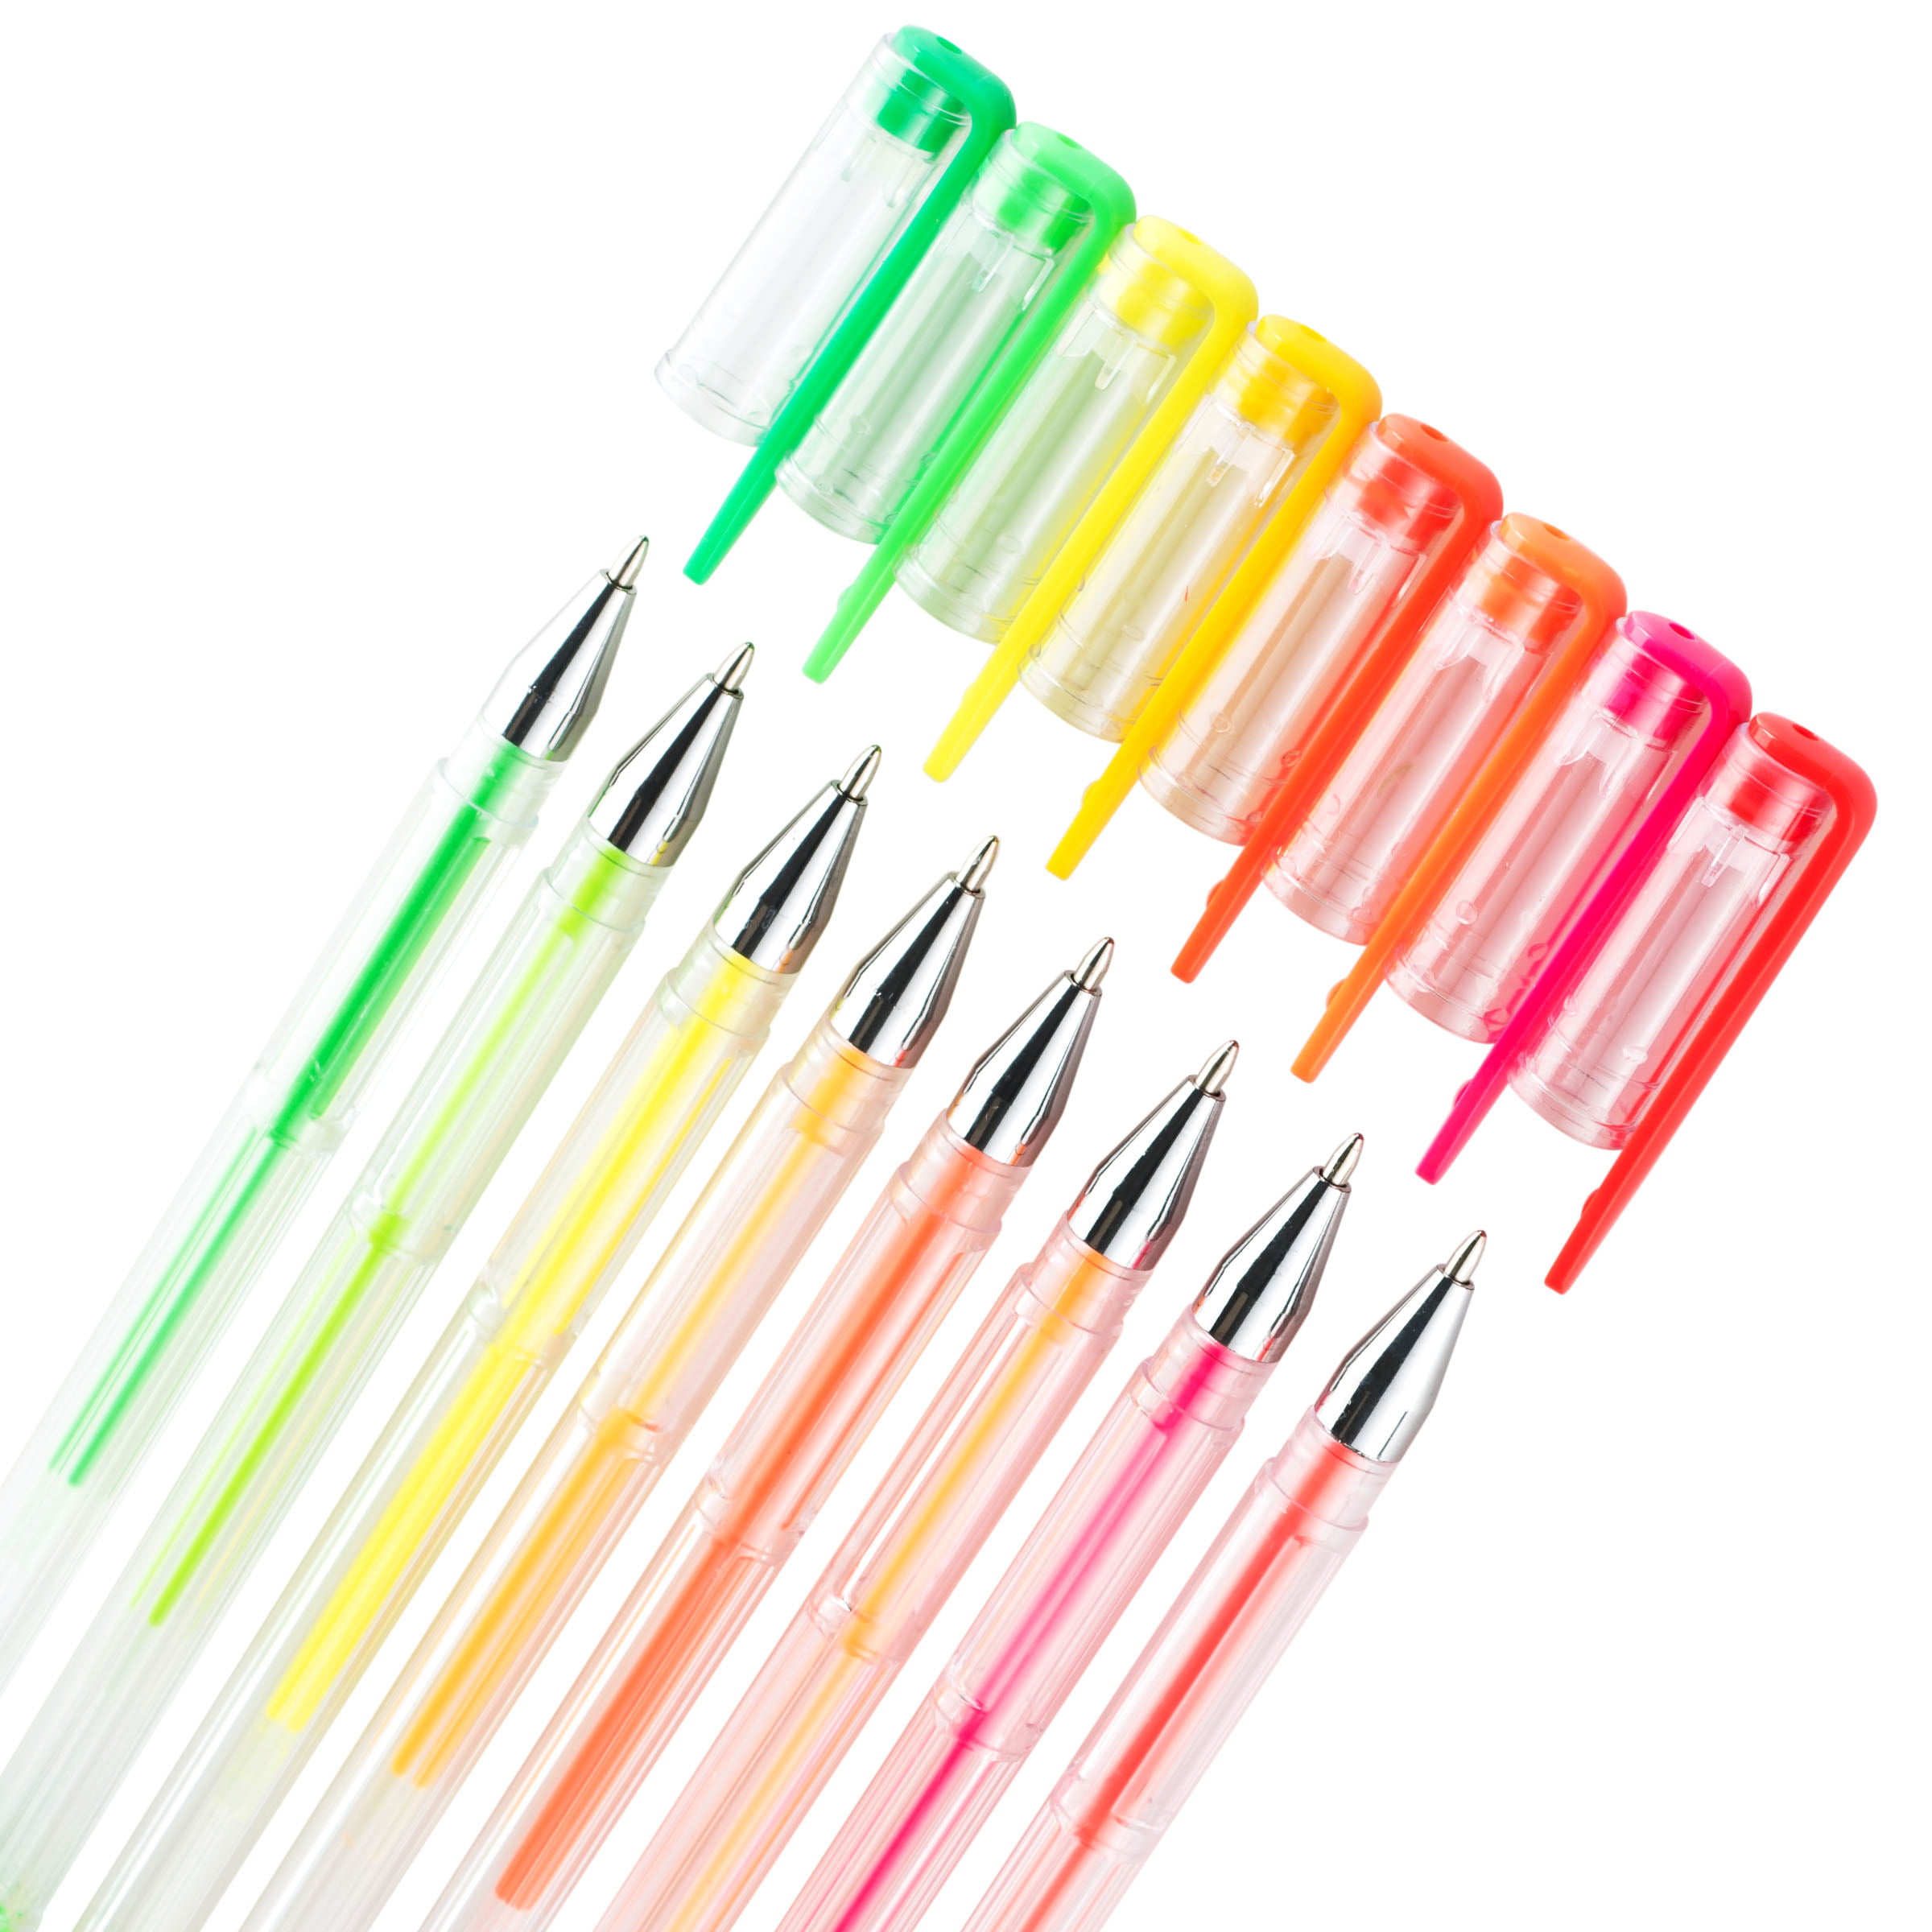  YKKZART 320 Pack Gel pens Set 160 Colored Gel Pen with 160  Refills,40% More Ink Glitter Metallic Pastel Neon Morandi Gel pens for Kids  Adults Coloring Books Drawing Crafts Scrapbooks